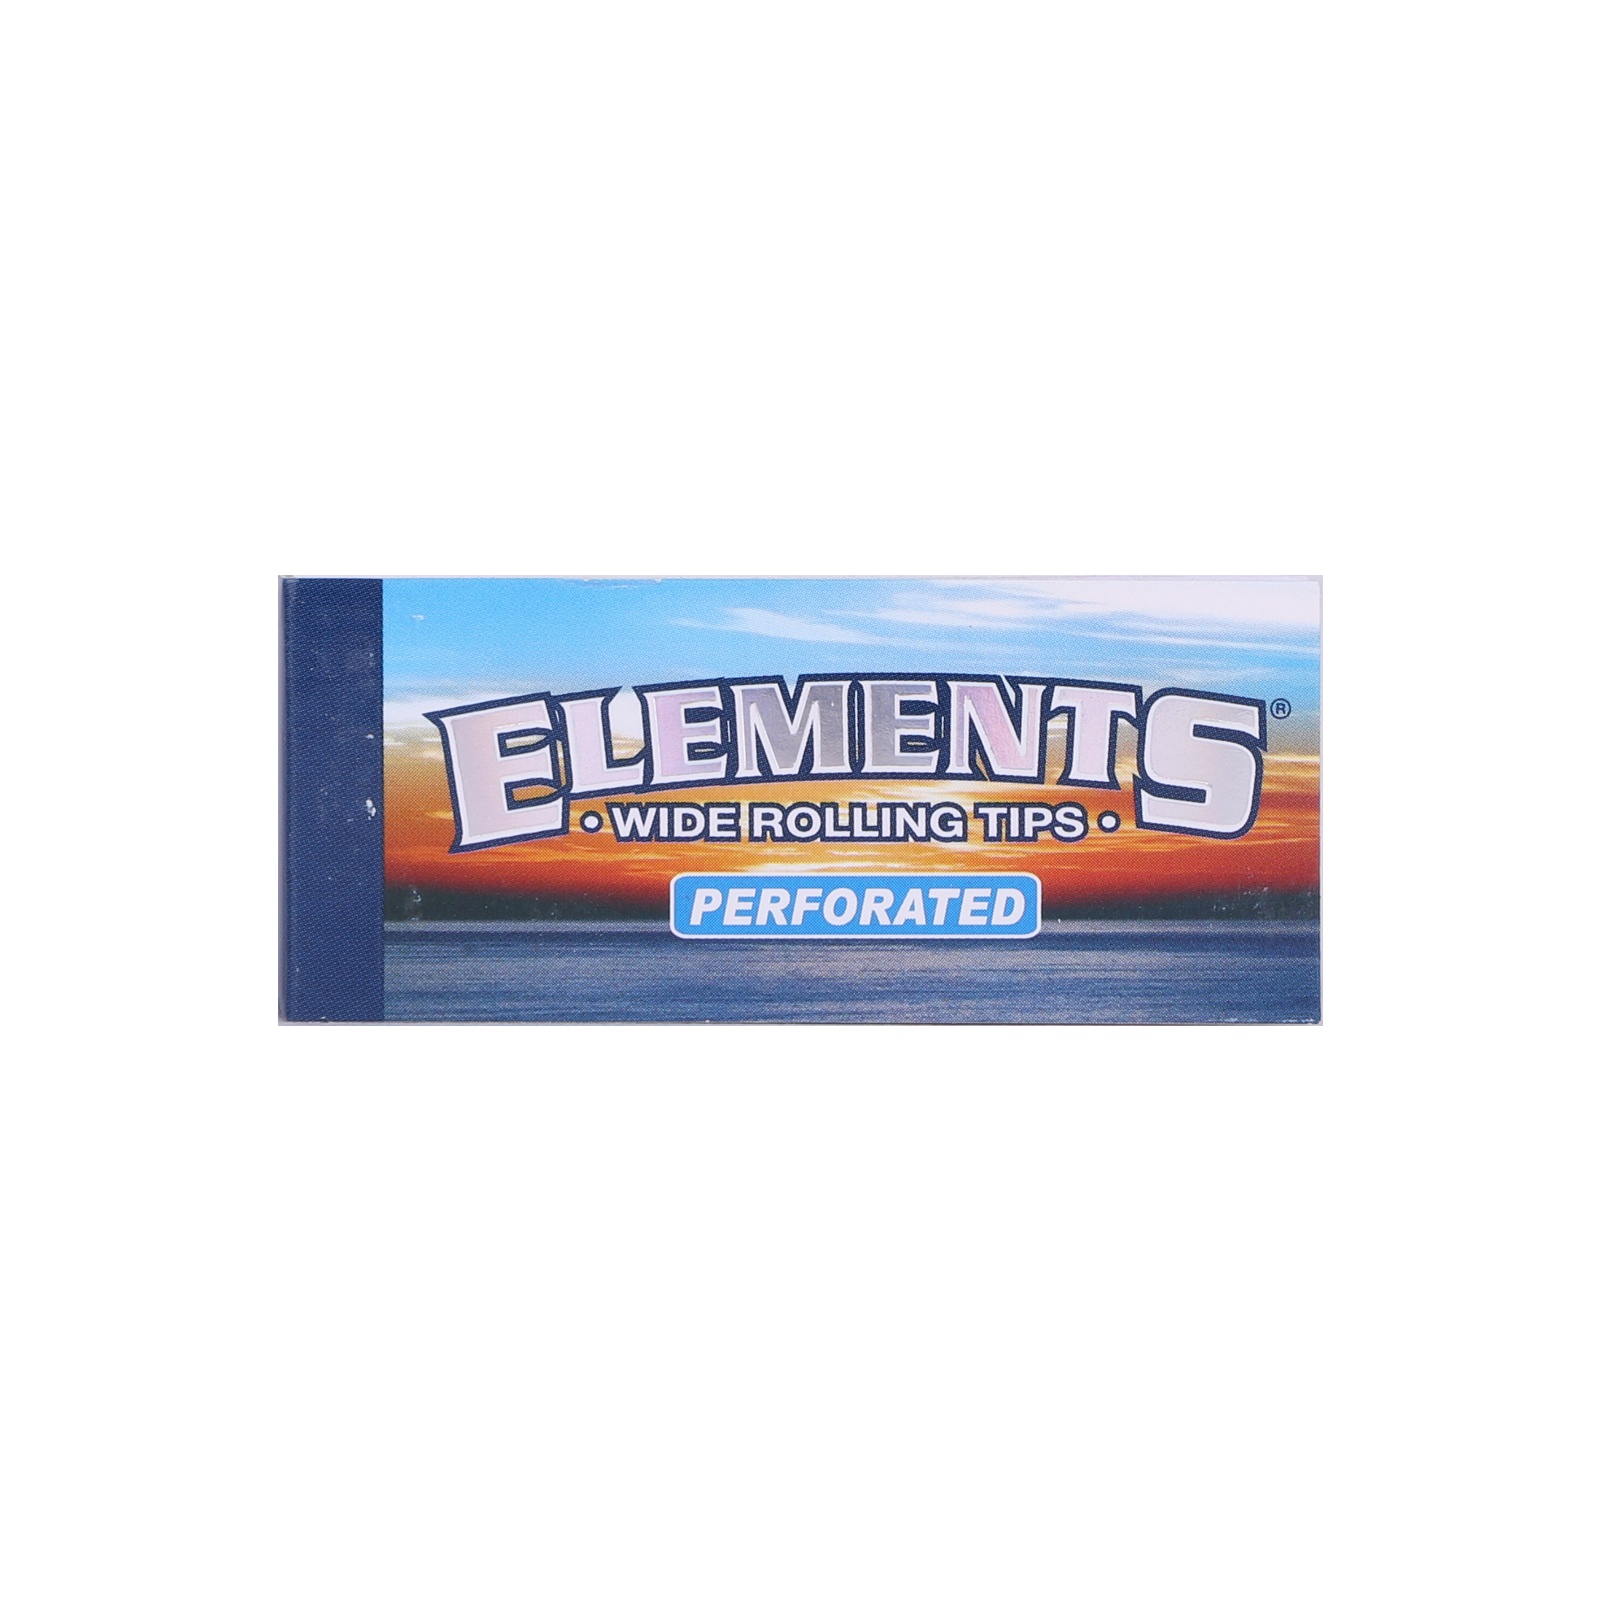 Фильтры Elements Tips Wide Perforated